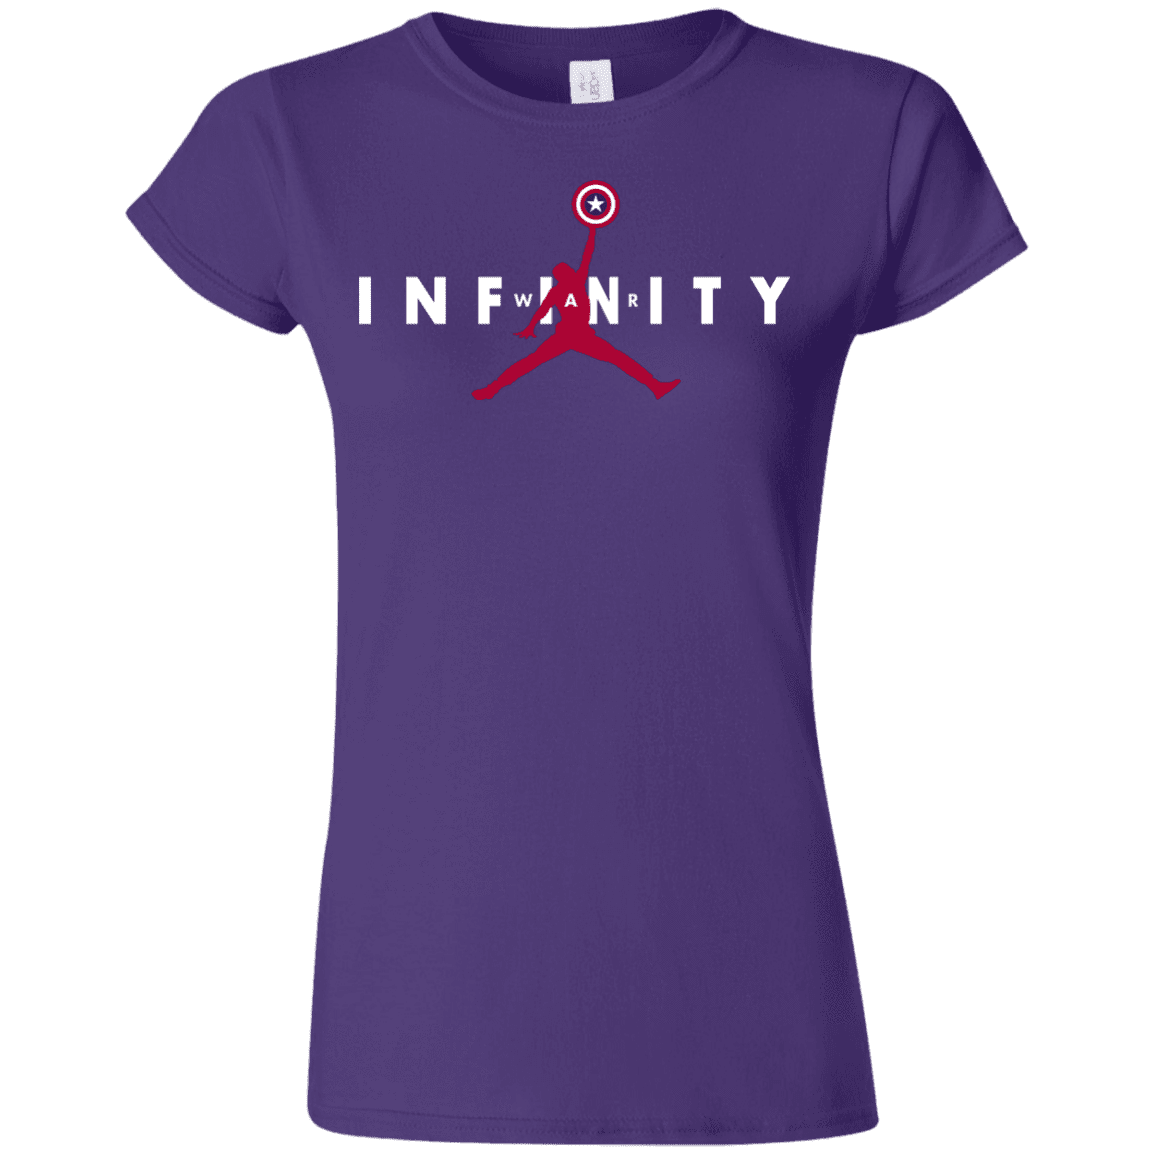 T-Shirts Purple / S Infinity Air Junior Slimmer-Fit T-Shirt